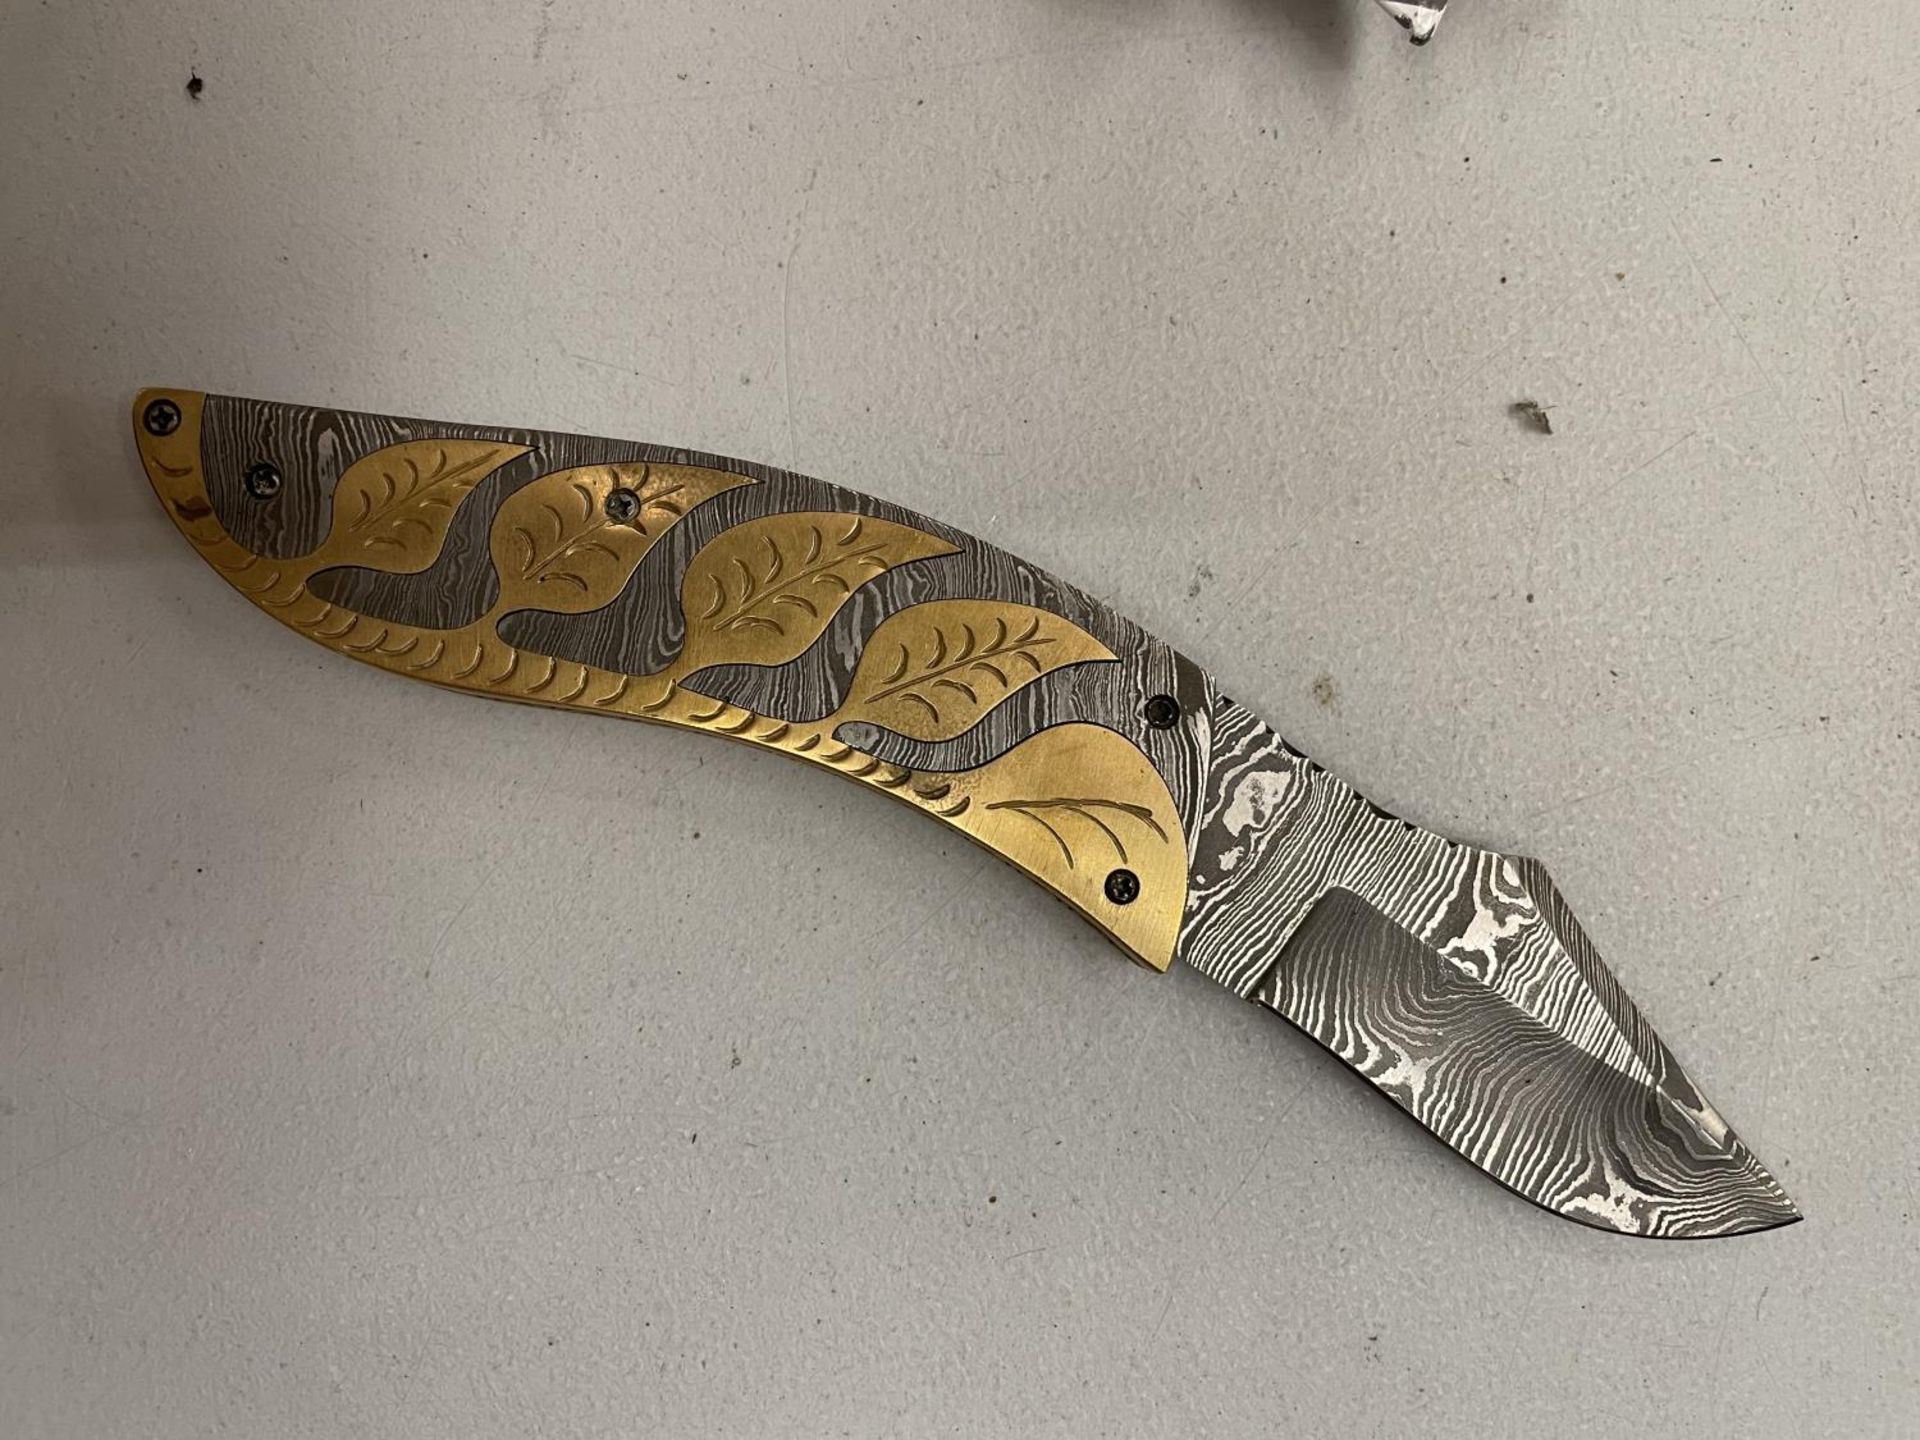 AN ORNATE 'PERKIN' SINGLE BLADED FOLDING POCKET KNIFE WITH DAMASCUS BLADE